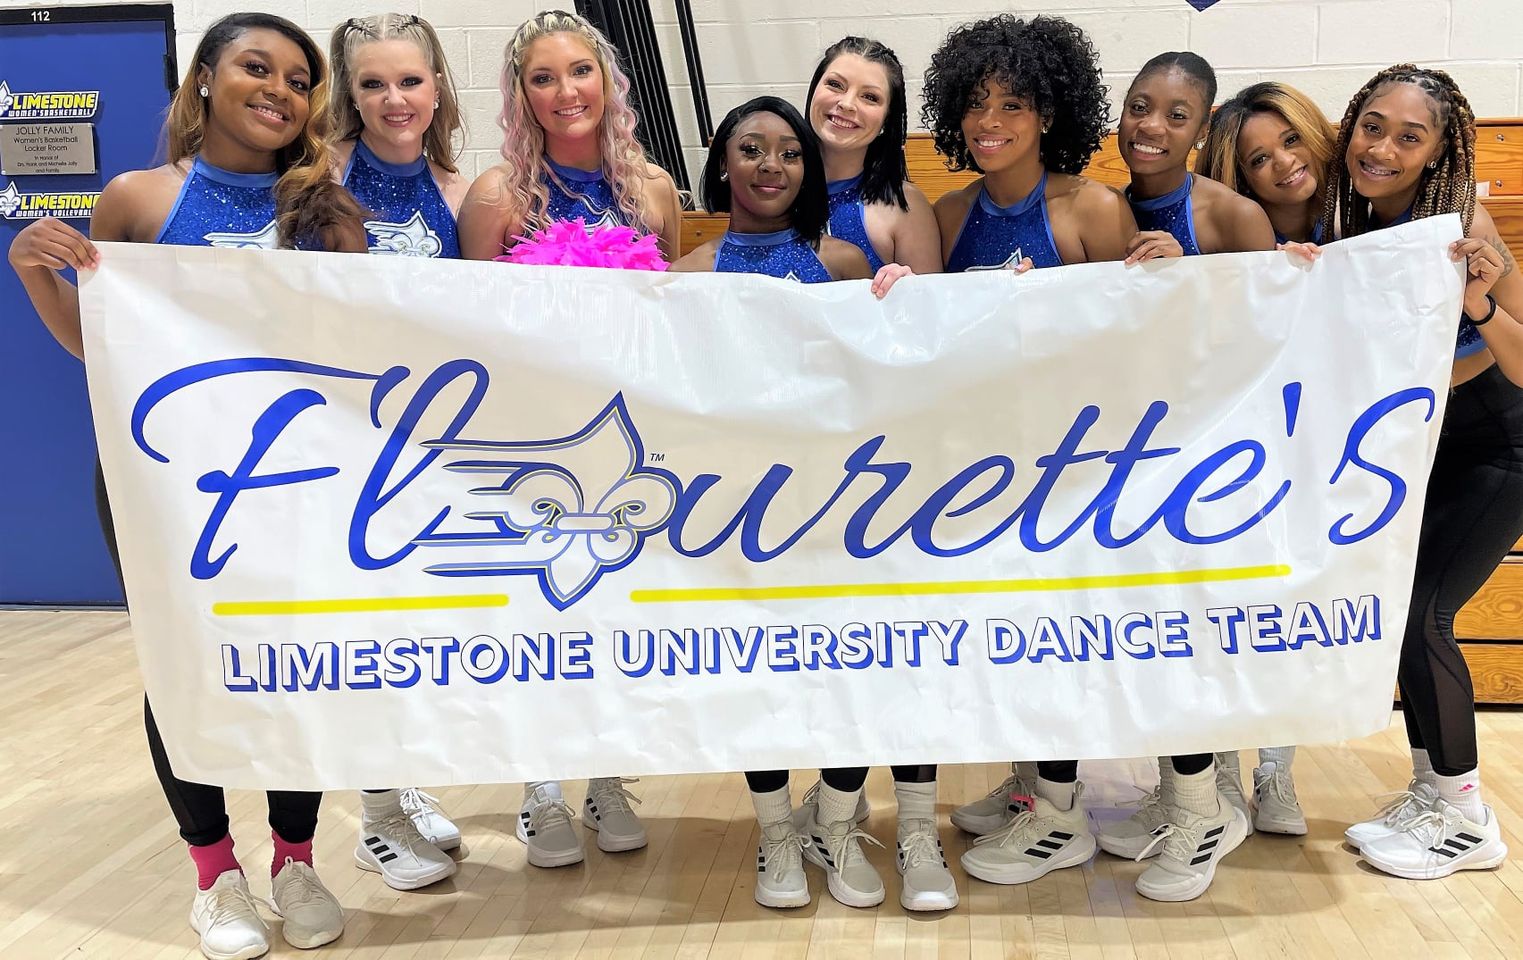 Limestone's Fleurettes dance team and mascot Bernie will help celebrate Cherokee County's 125th birthday Feb. 25.